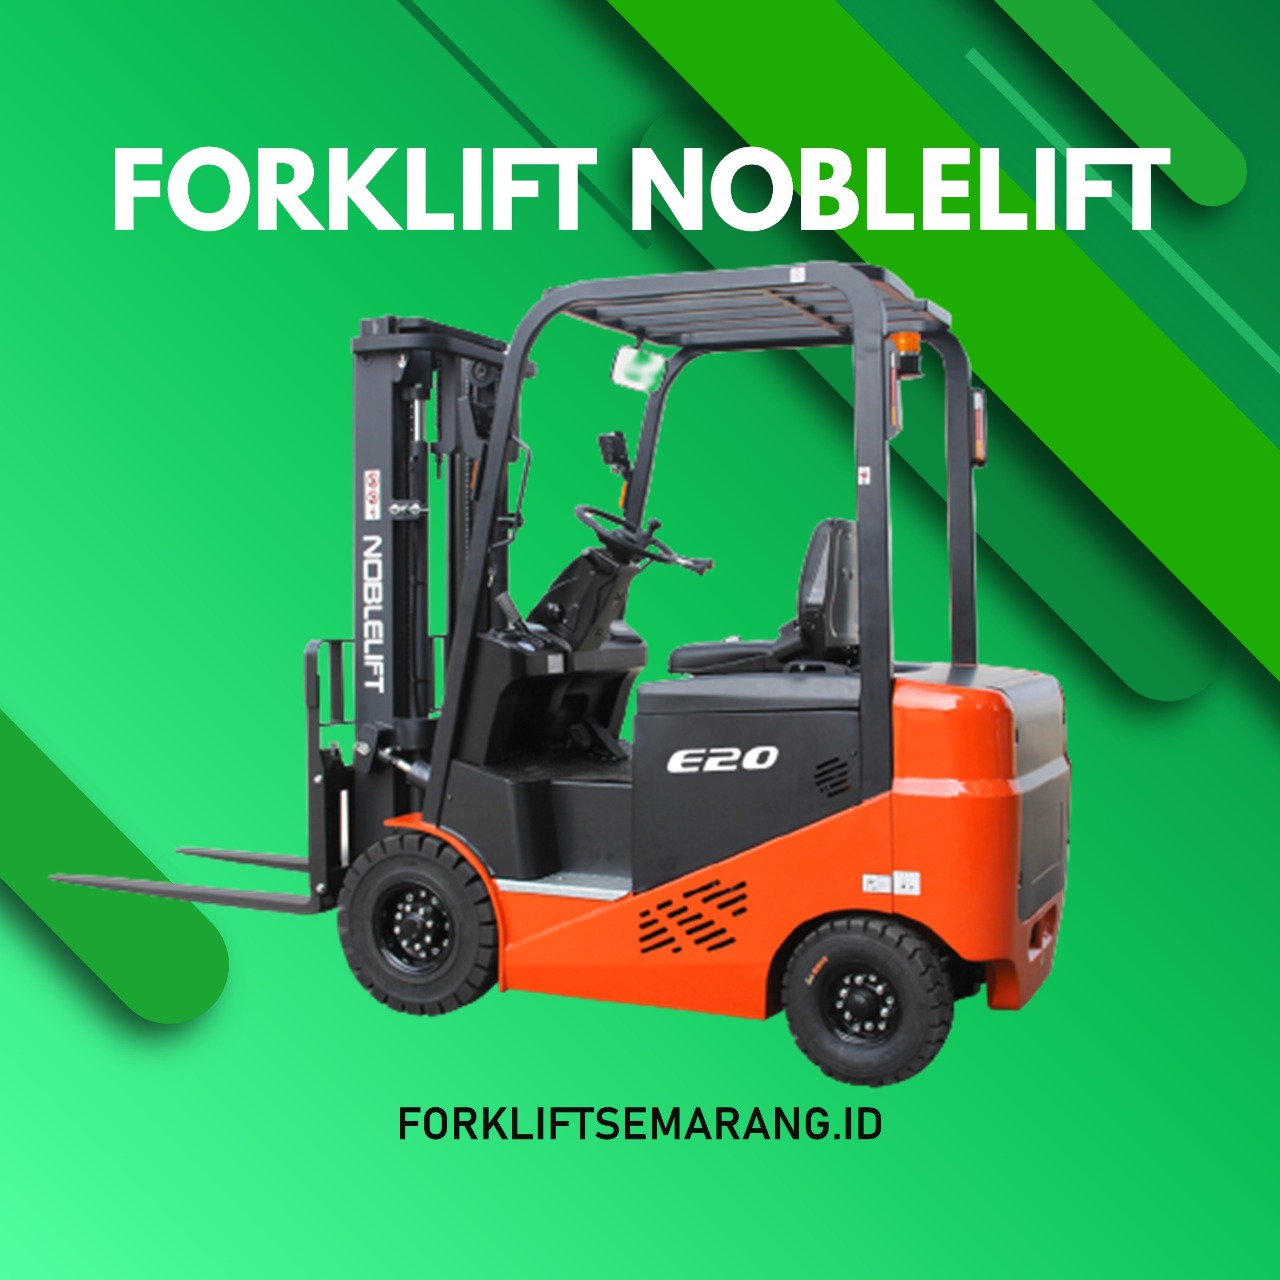 Kelebihan Forklift Battery NOBLELIFT